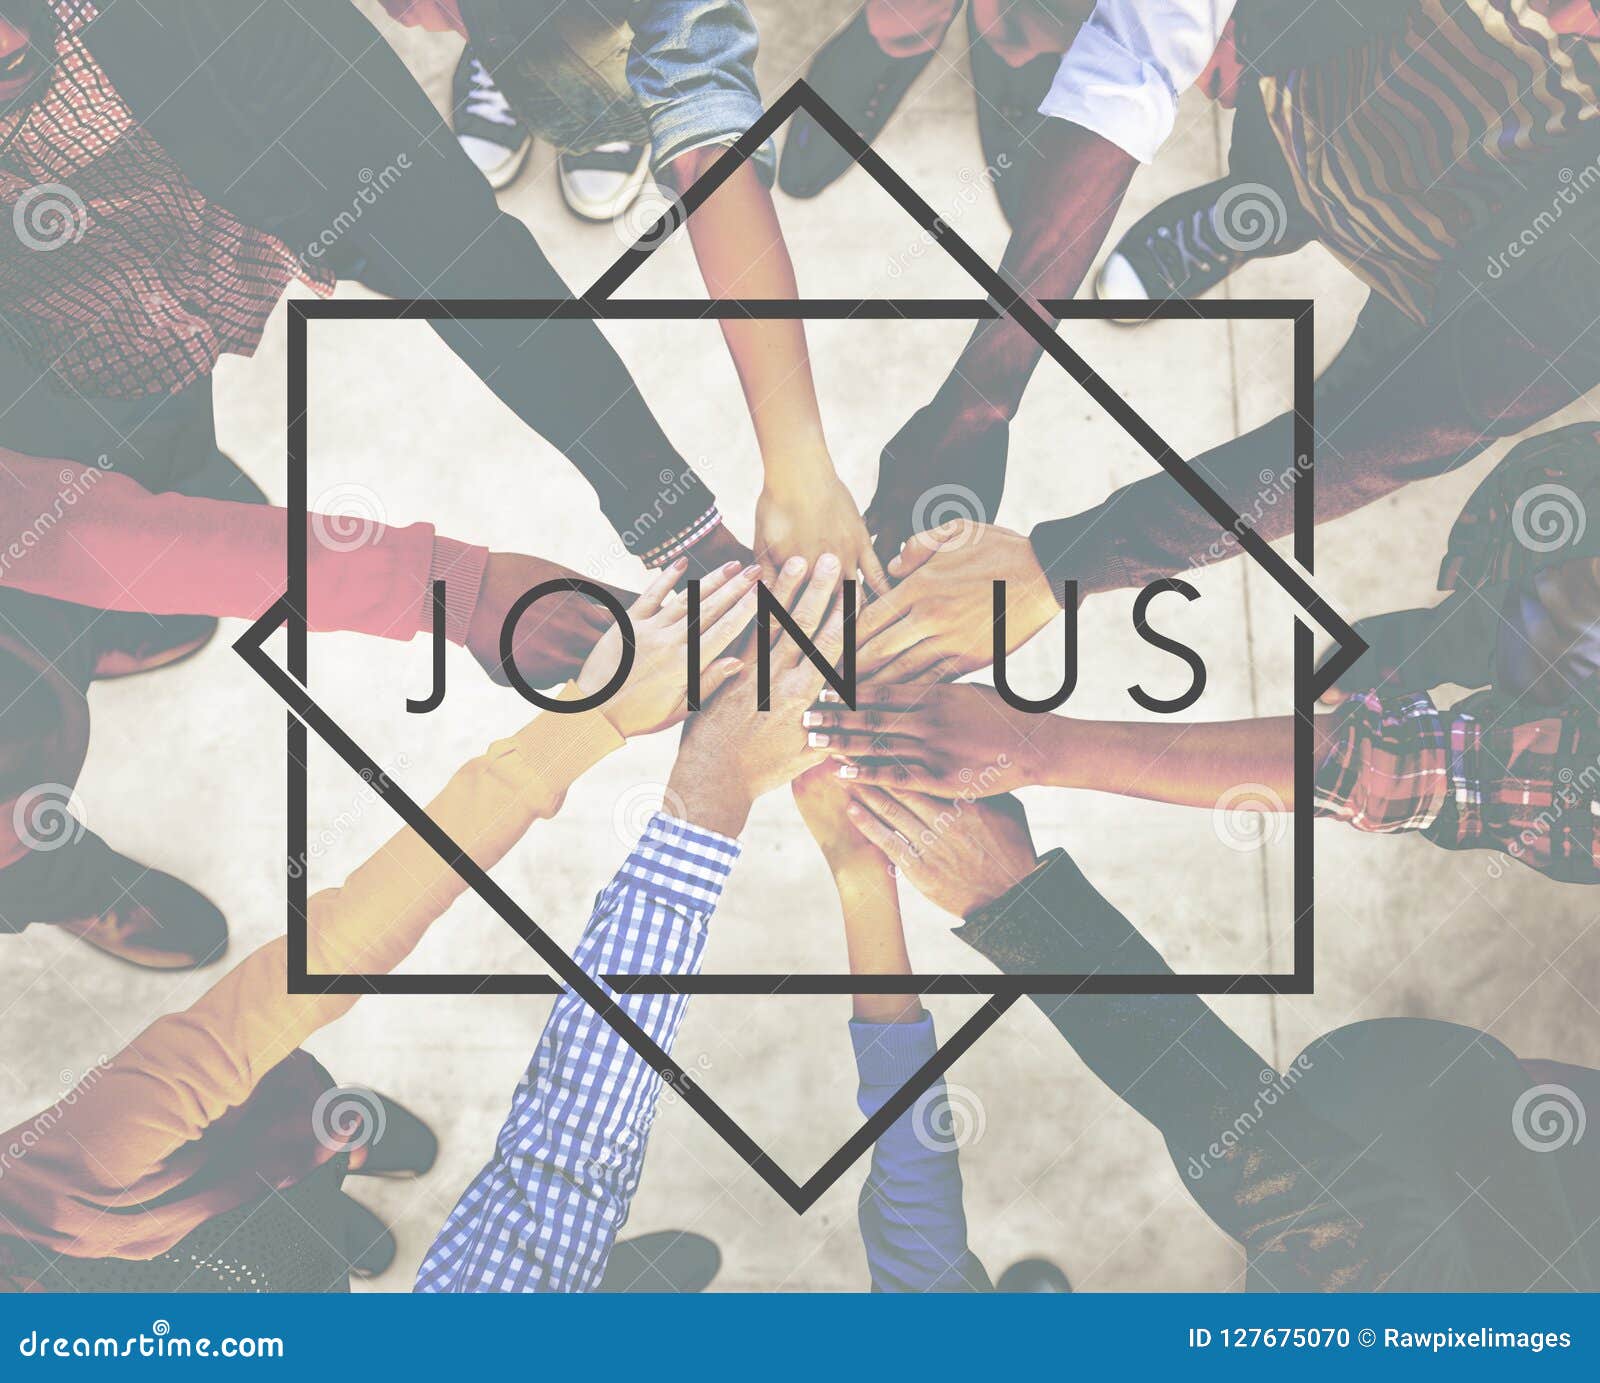 join us apply hiring membership recruit team concept